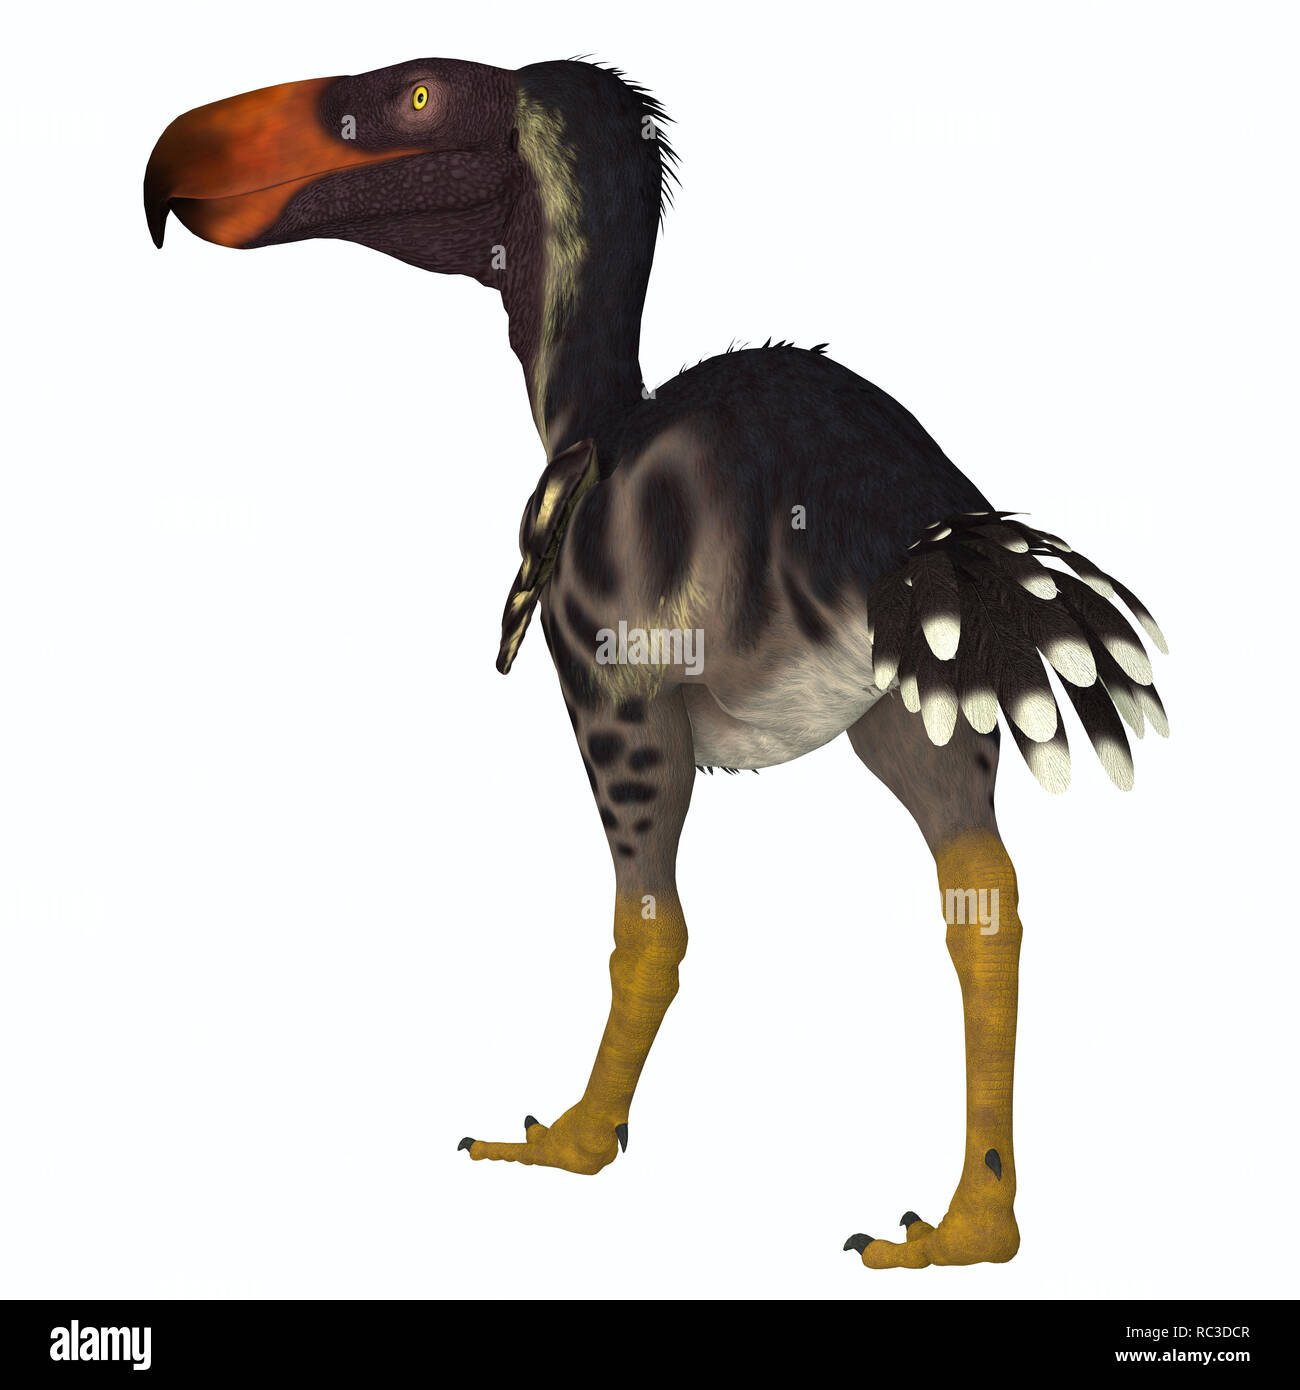 Kelenken Bird - Kelenken was a carnivorous "Terror bird" that lived in Argentina during the Miocene Period. Stock Photo